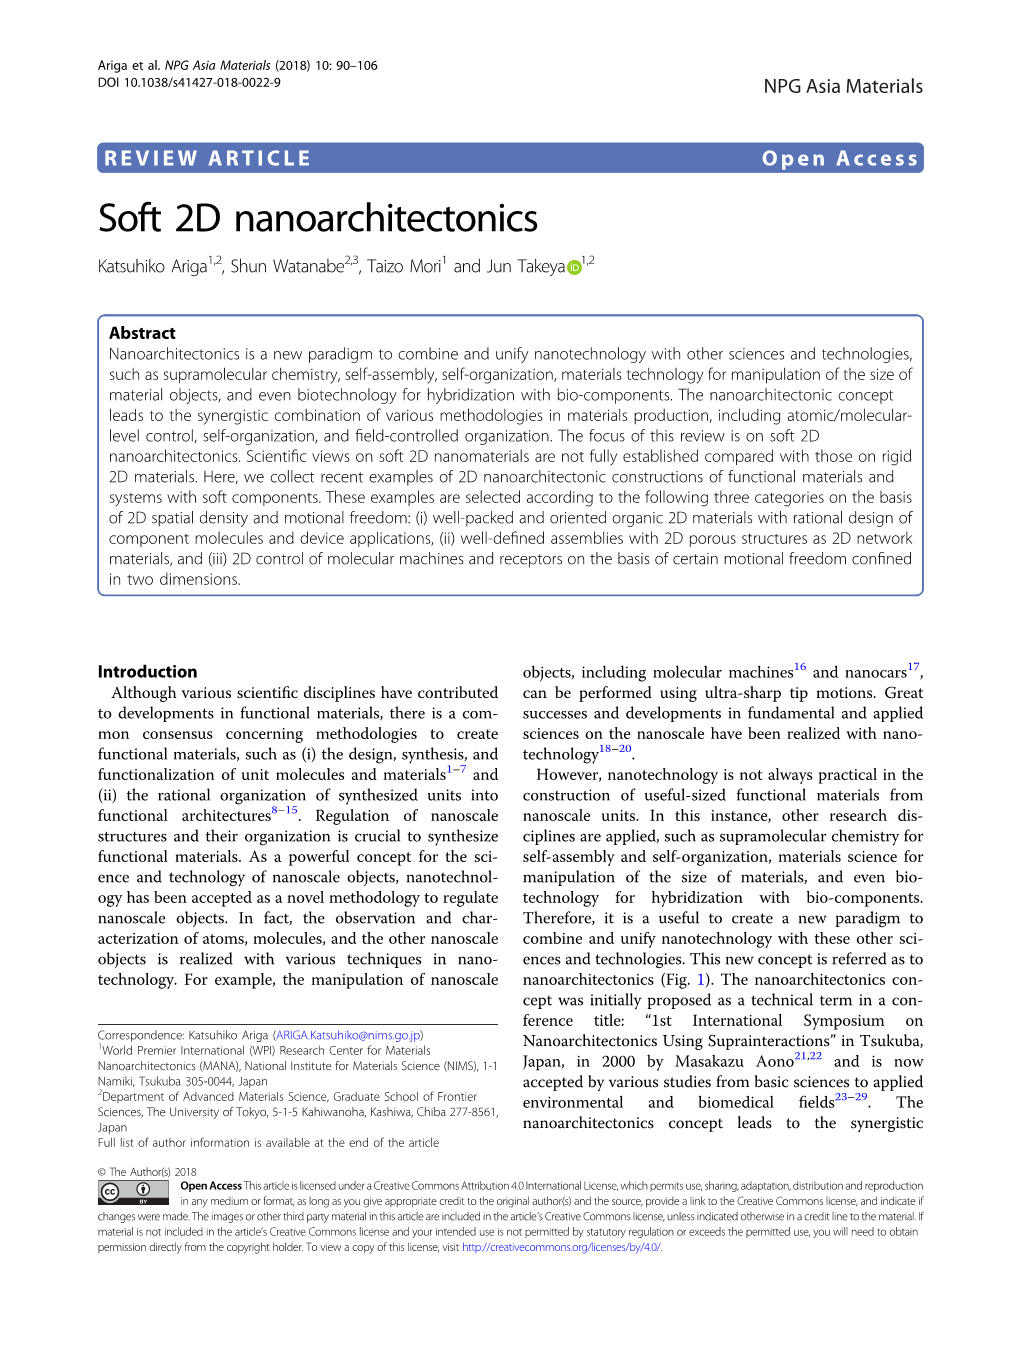 Soft 2D Nanoarchitectonics Katsuhiko Ariga1,2, Shun Watanabe2,3,Taizomori1 and Jun Takeya 1,2